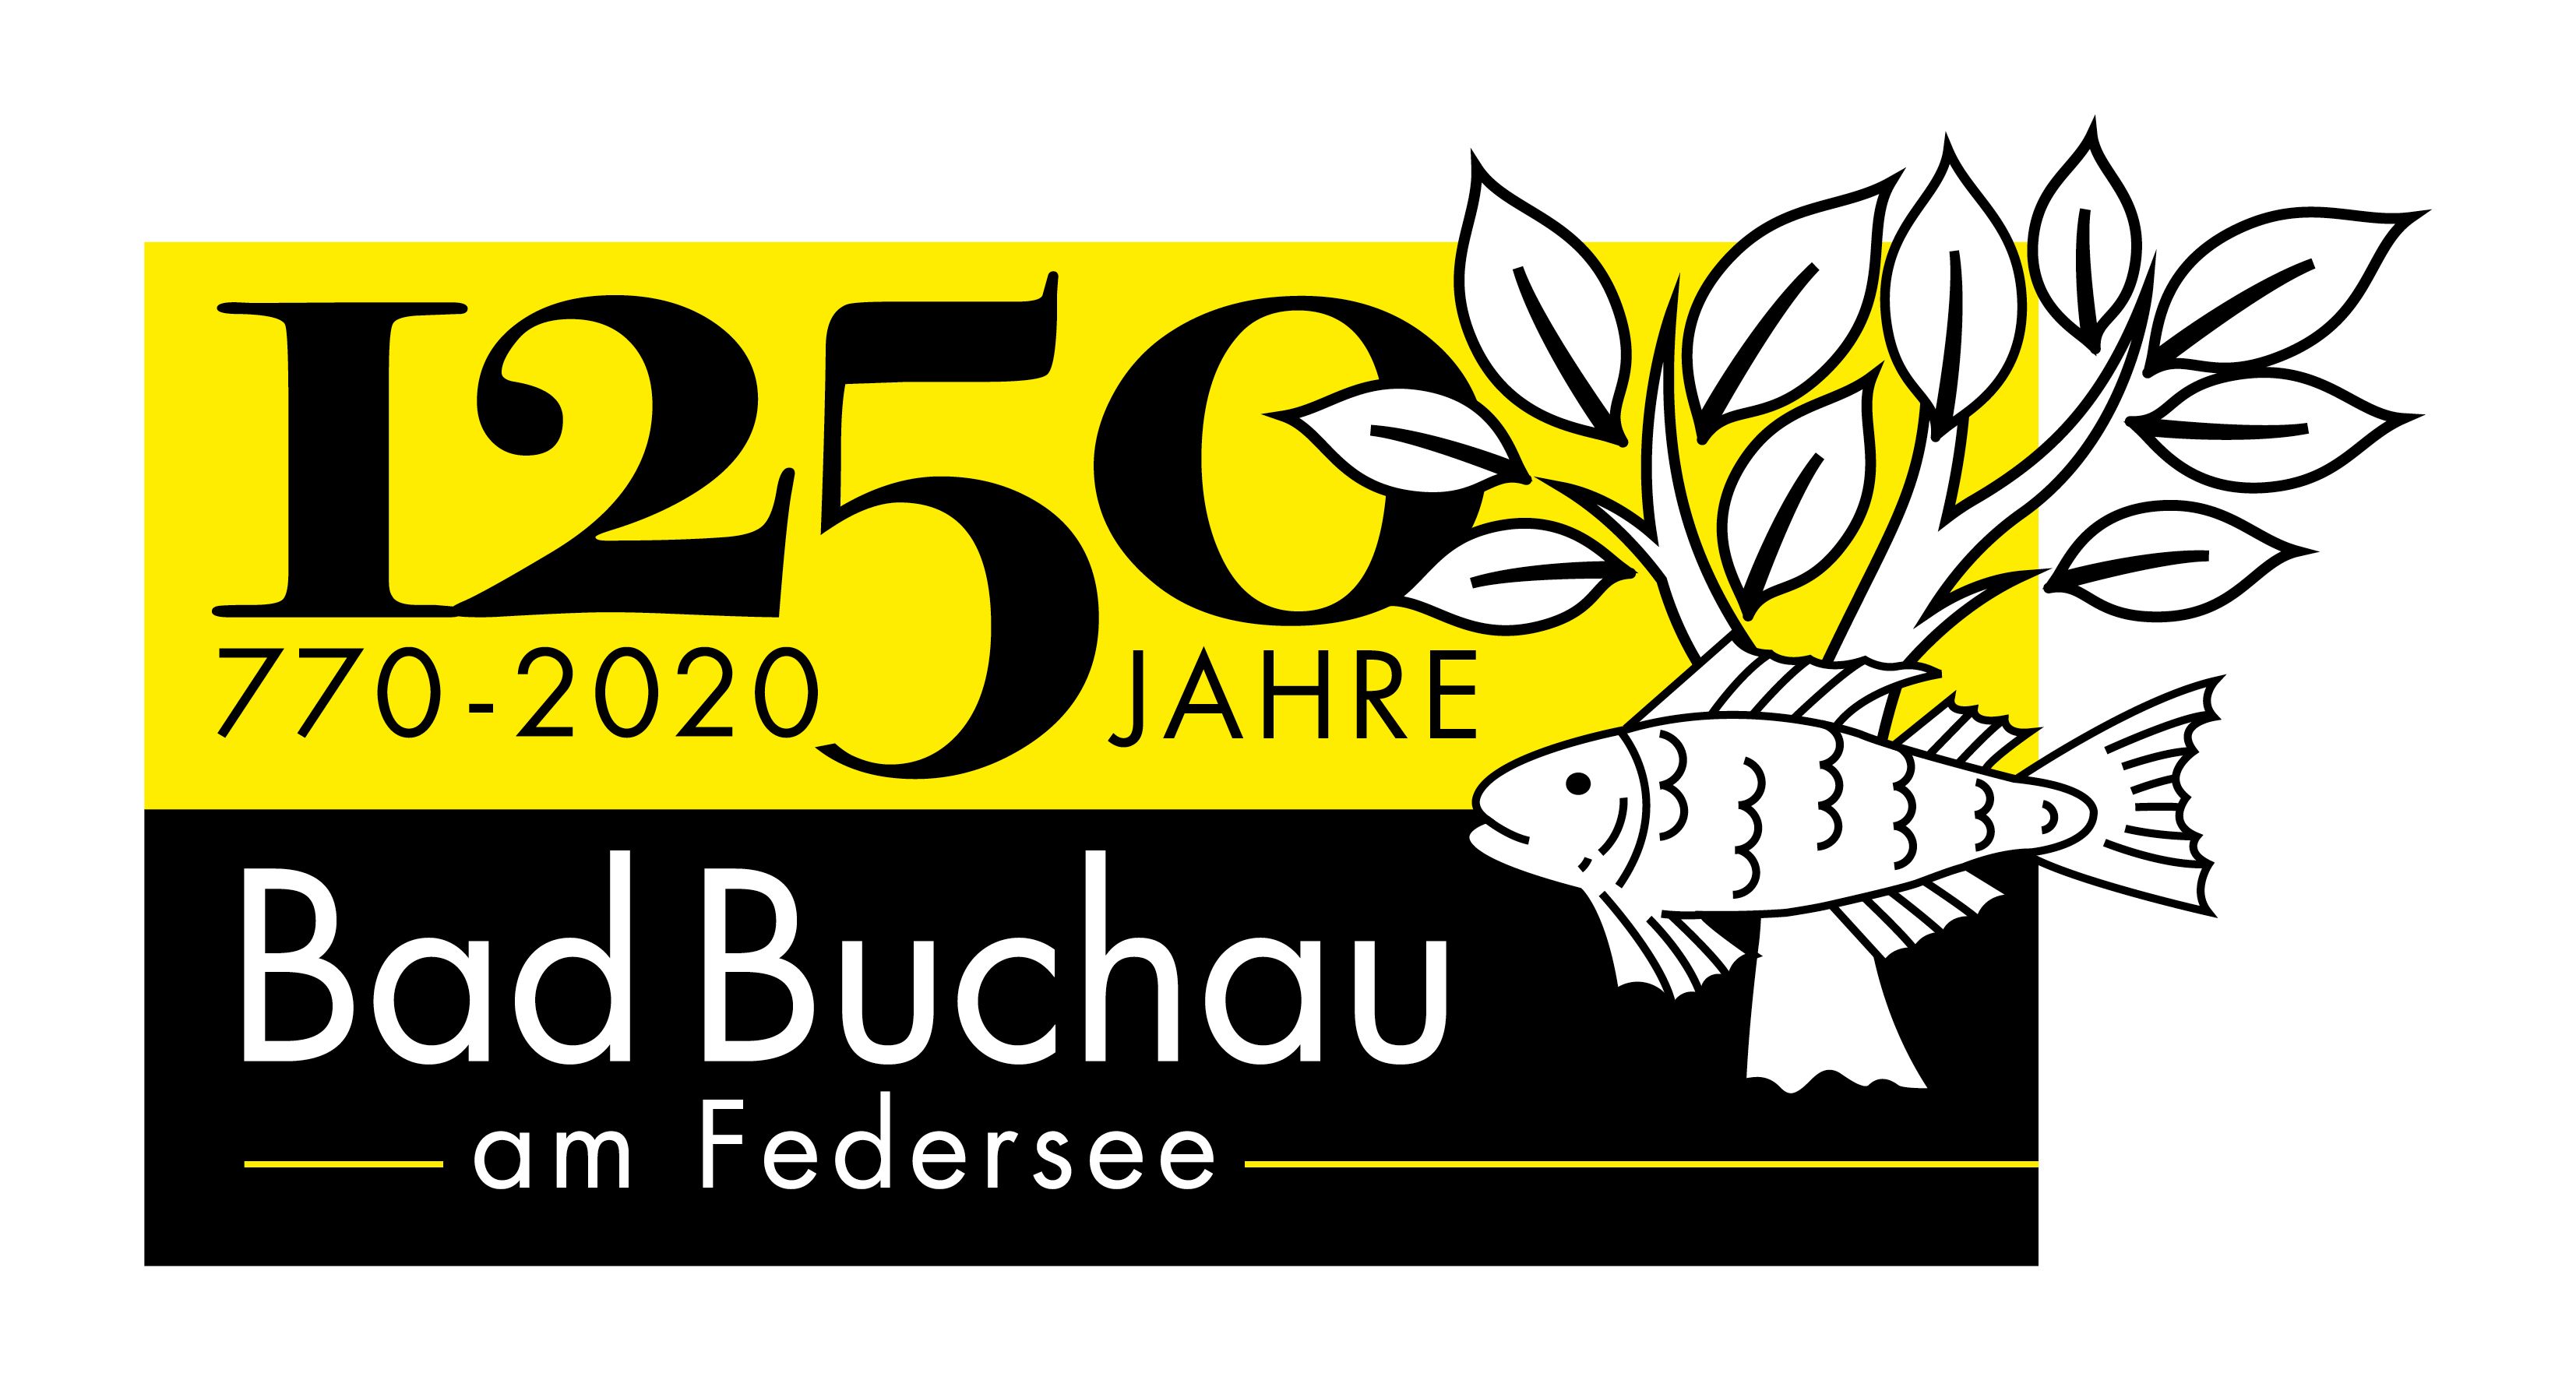  TOP 1: Logo-Entwurf 1250-Jahr-Feier 